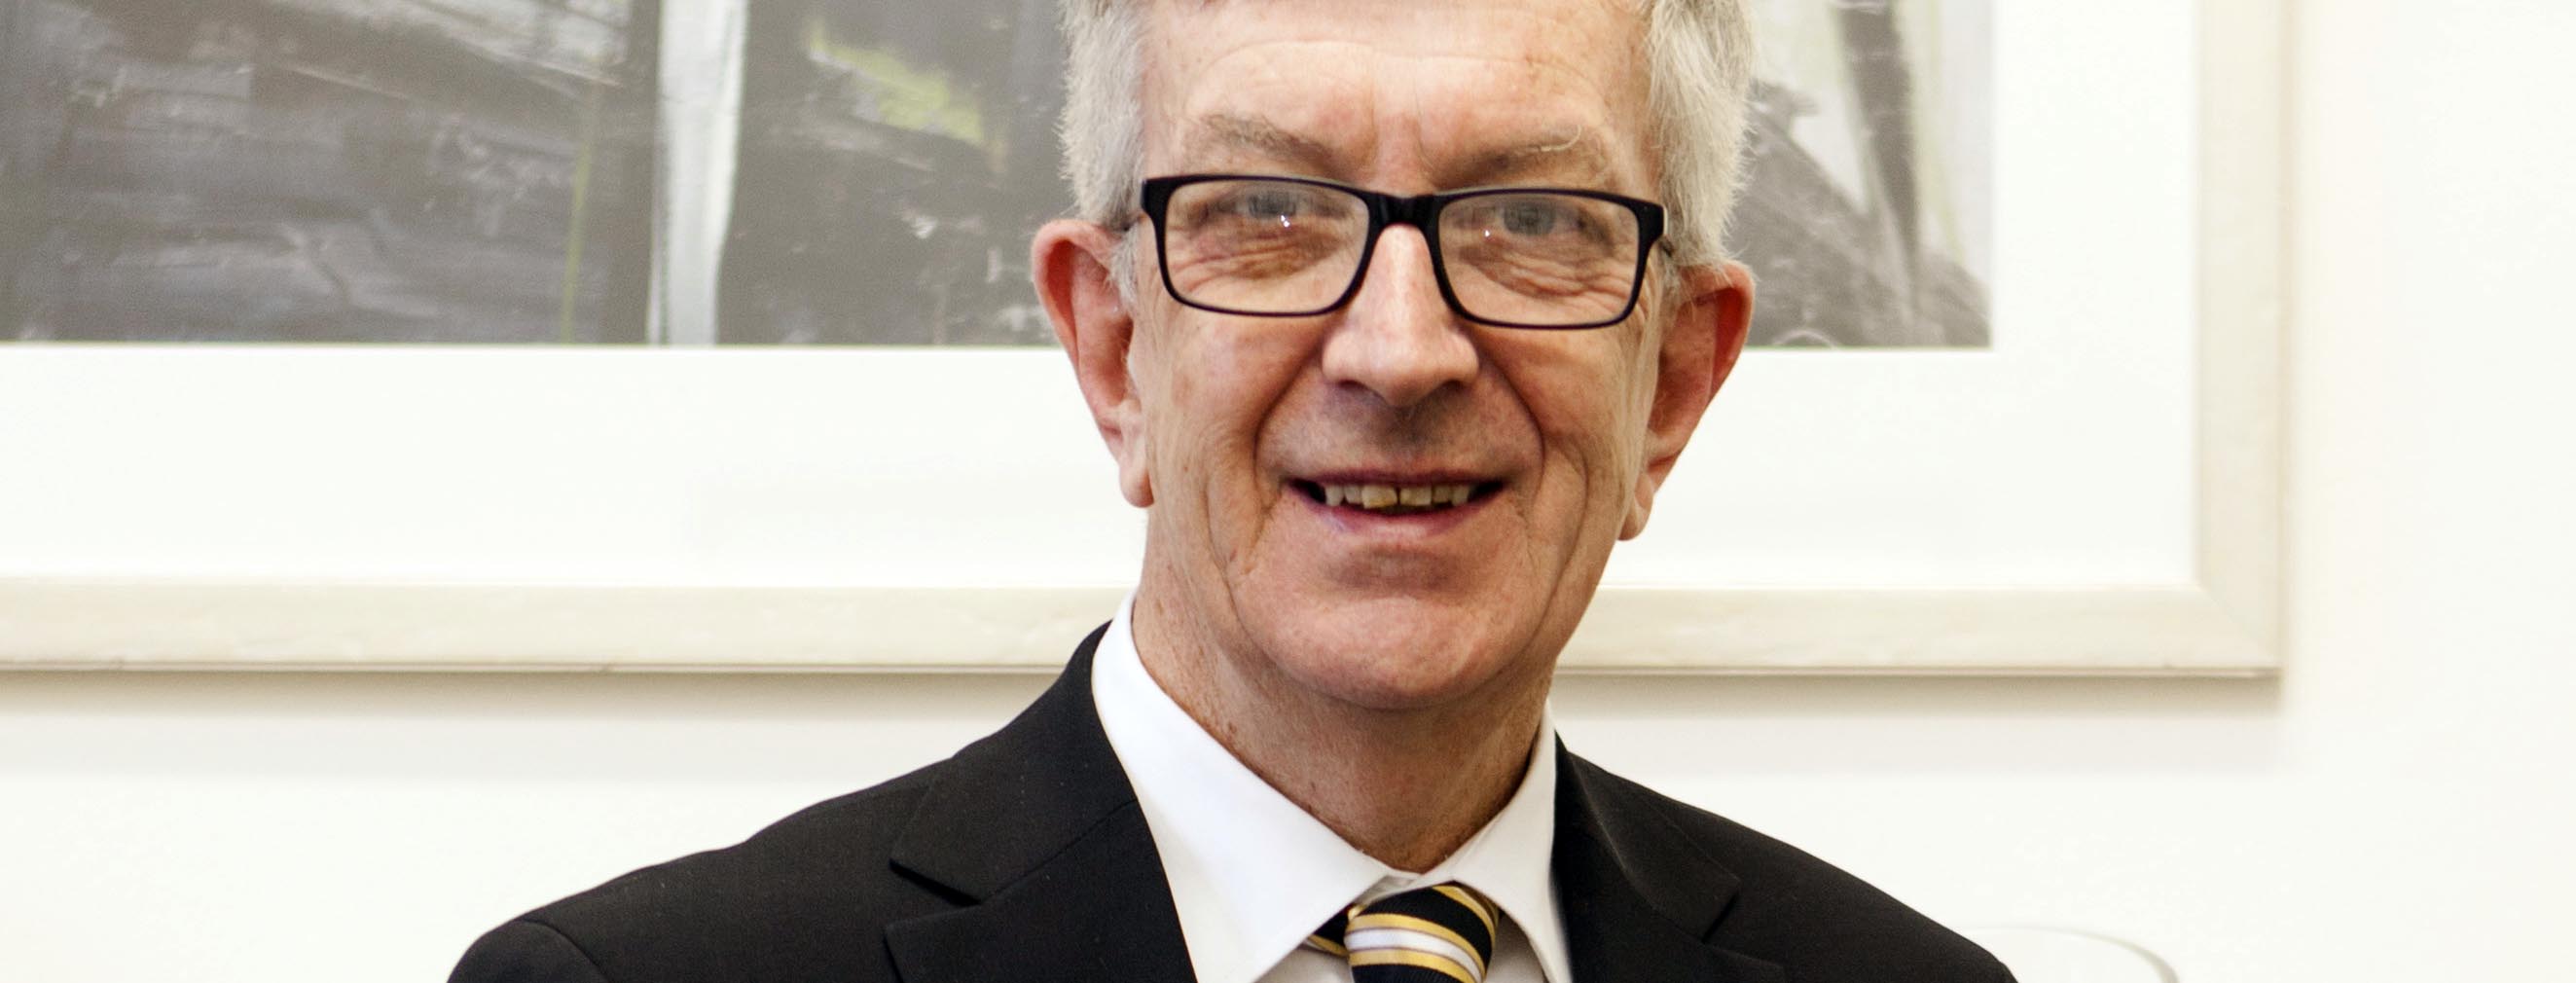 Employment-law expert Richard Grogan has died